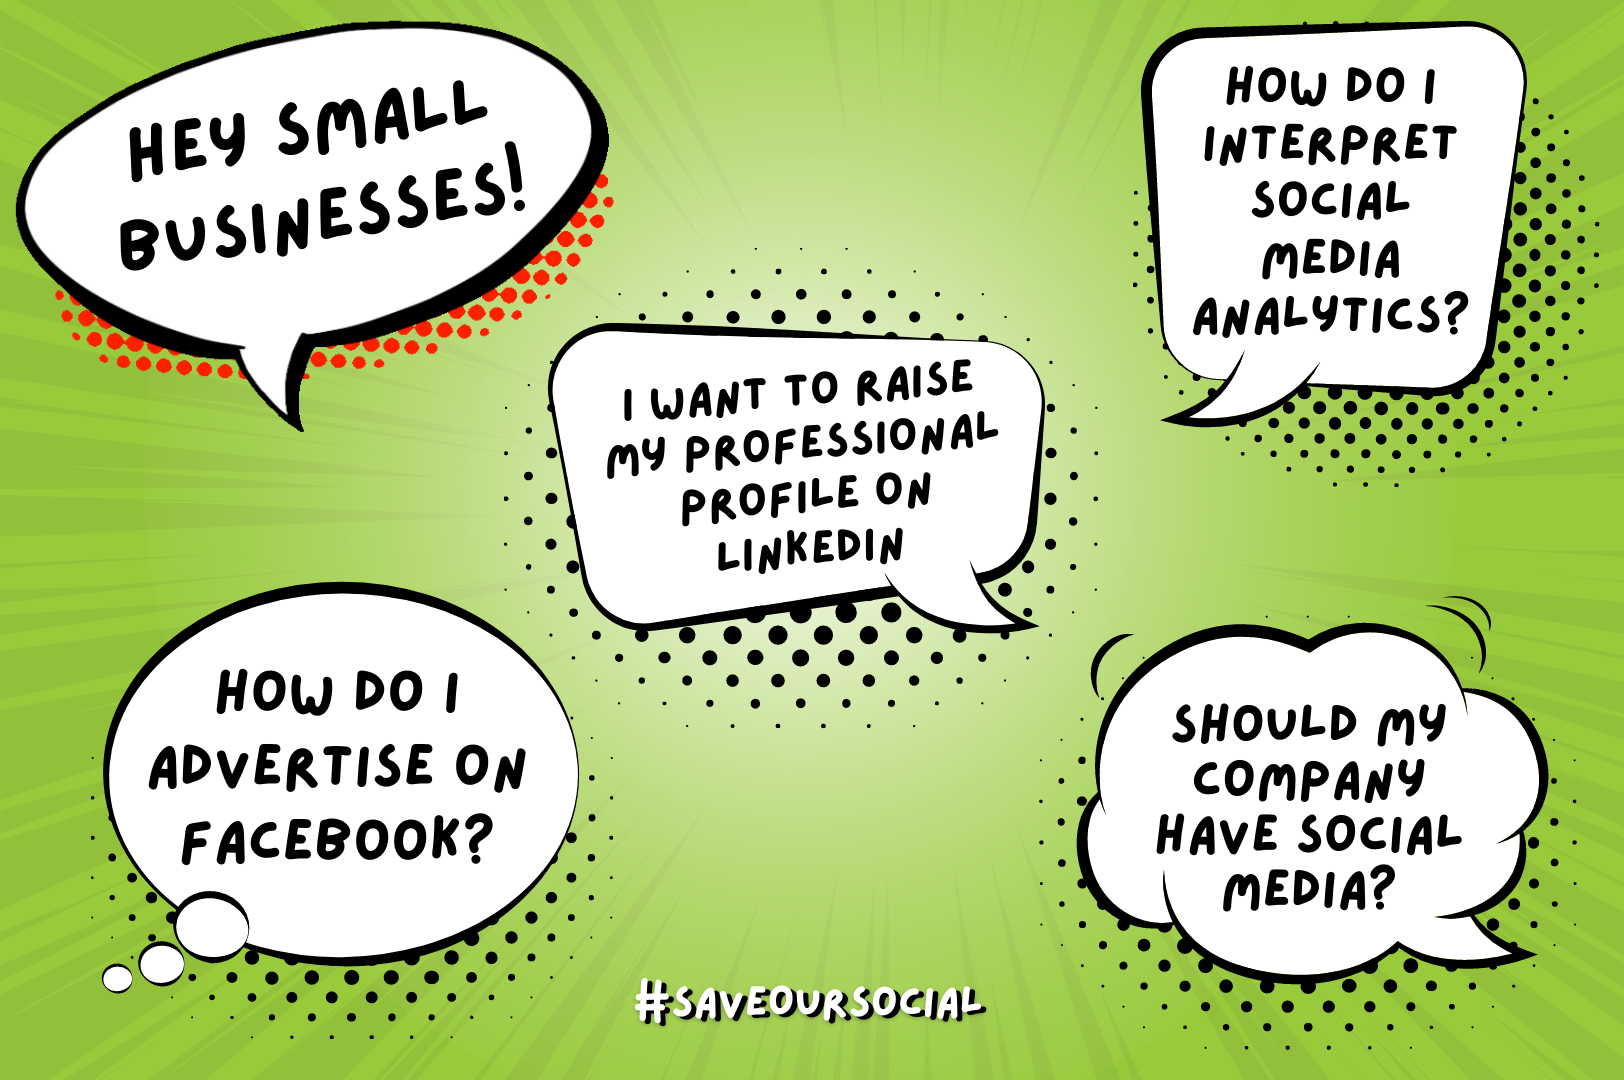 #SOS – Save Our Social: Global Entrepreneurship Week